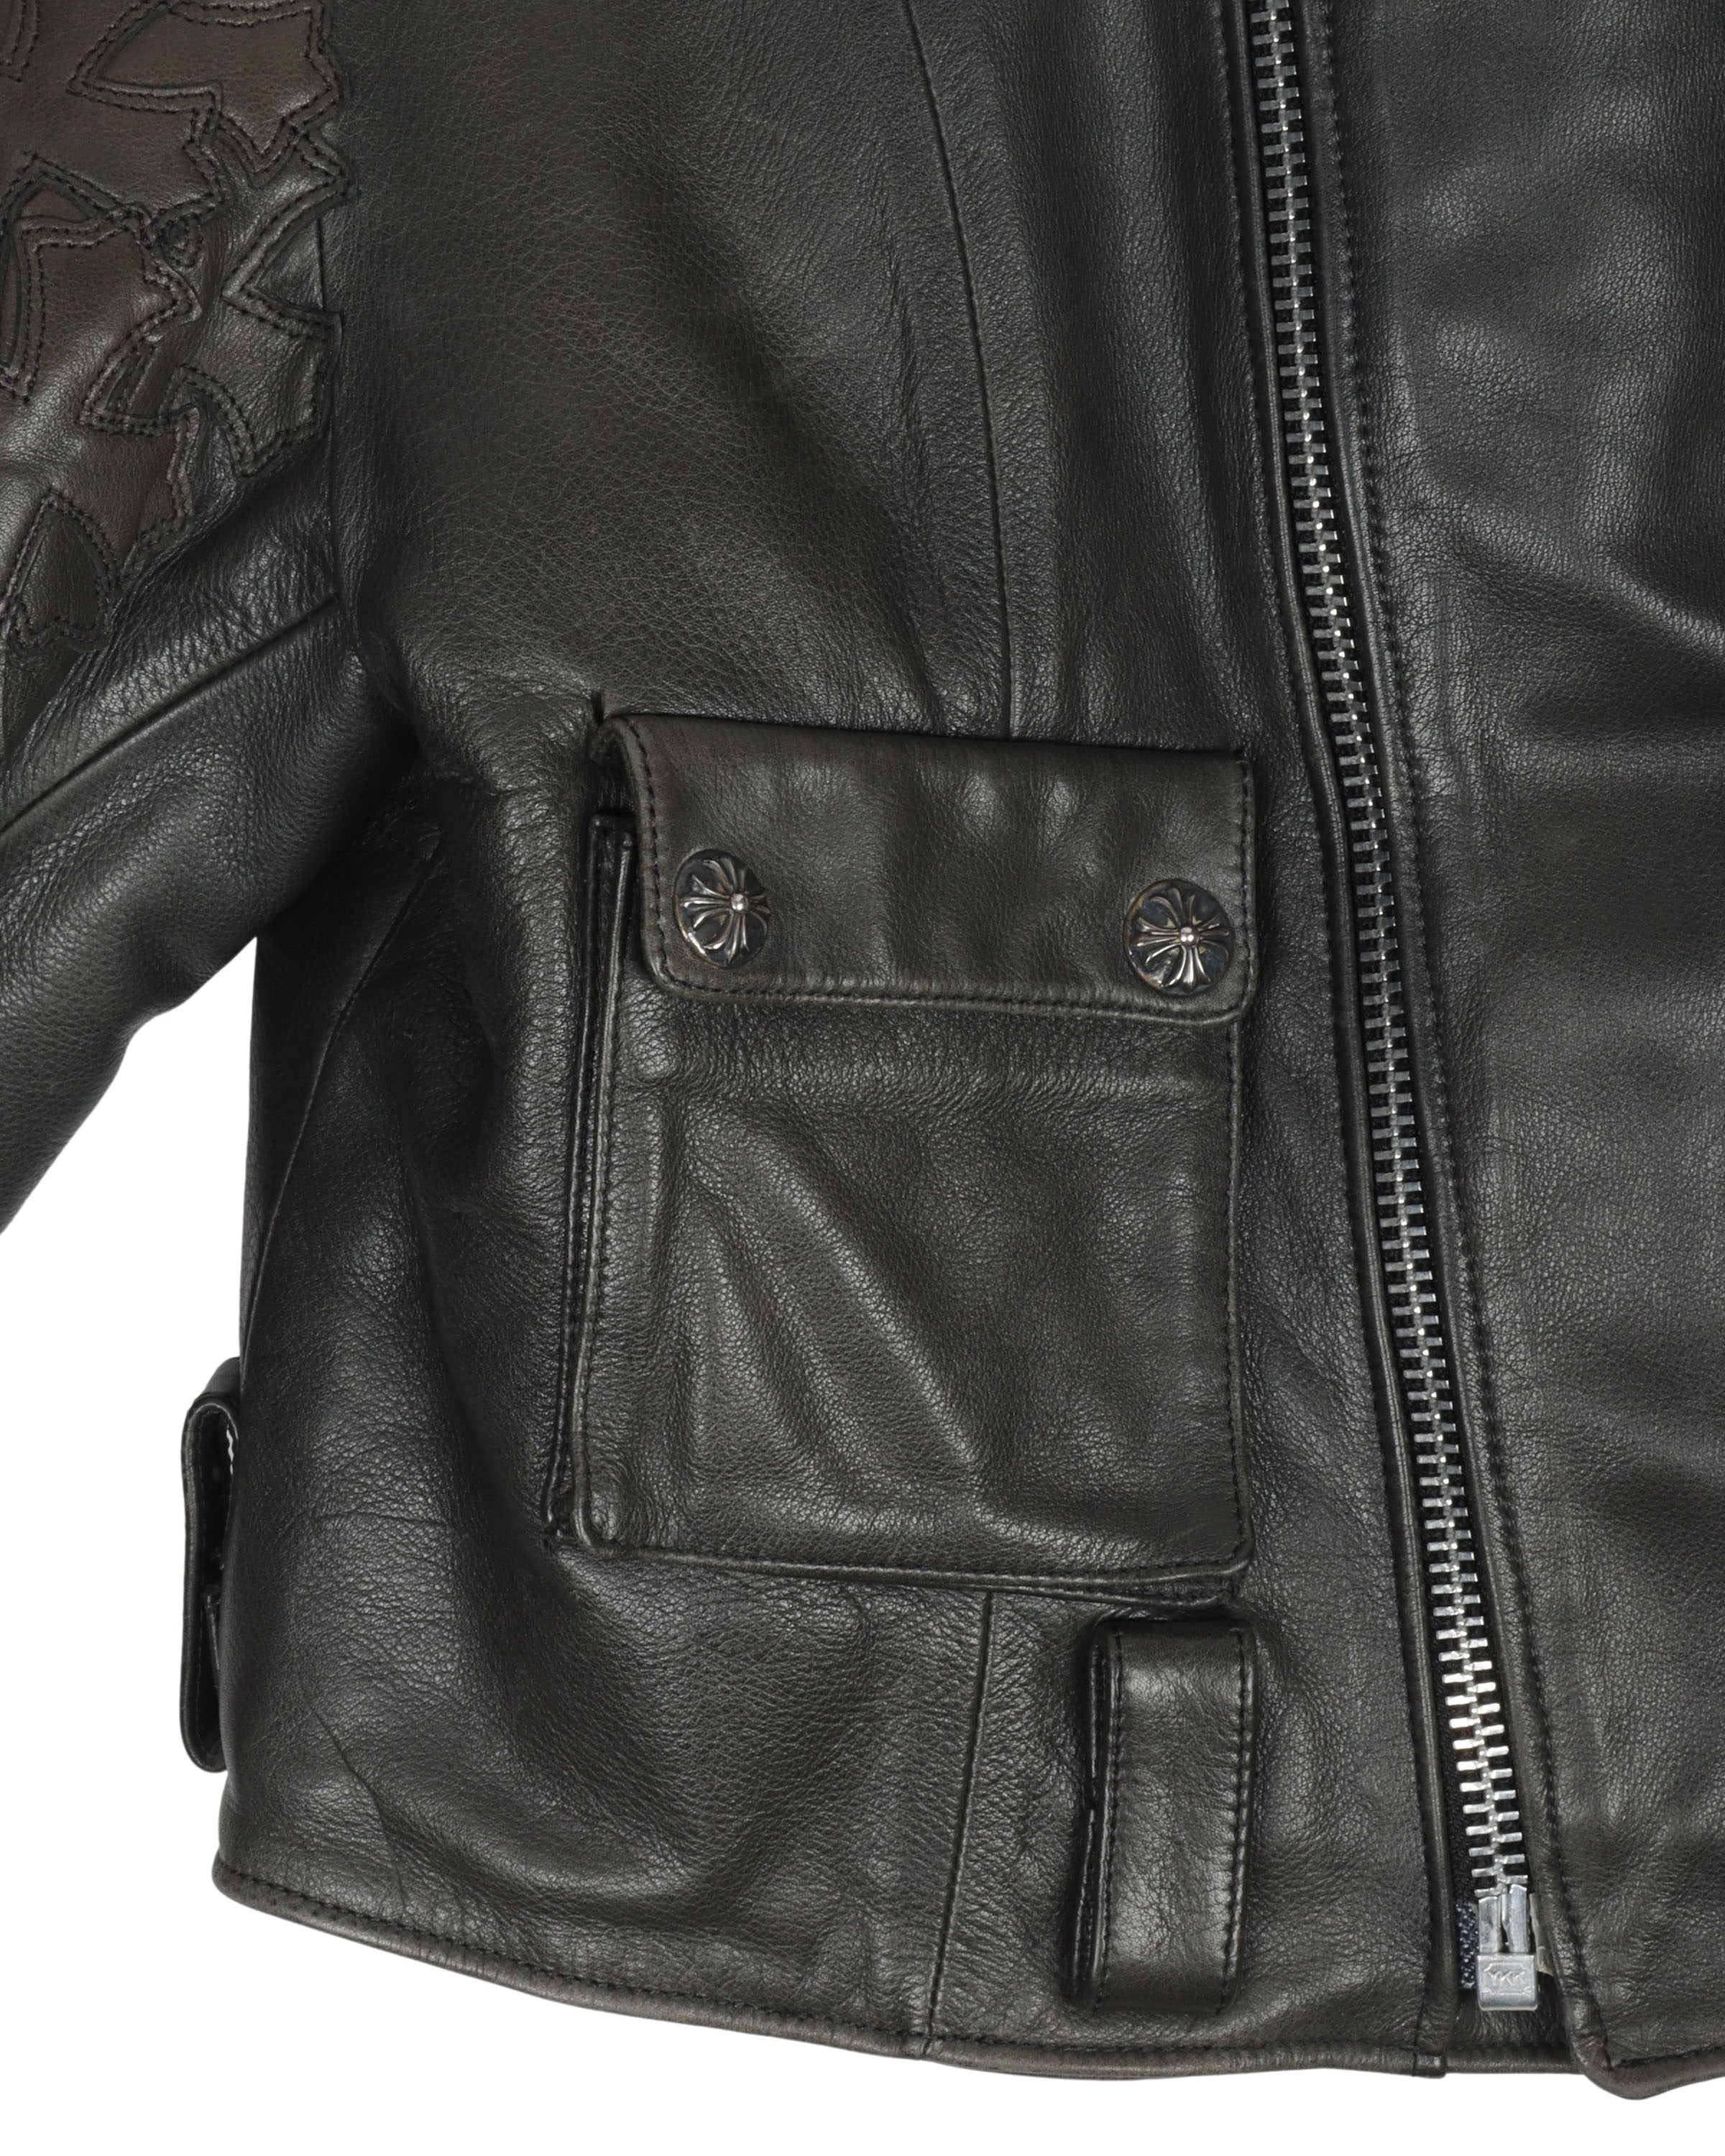 Cher's Custom Shearling Leather Bomber Jacket